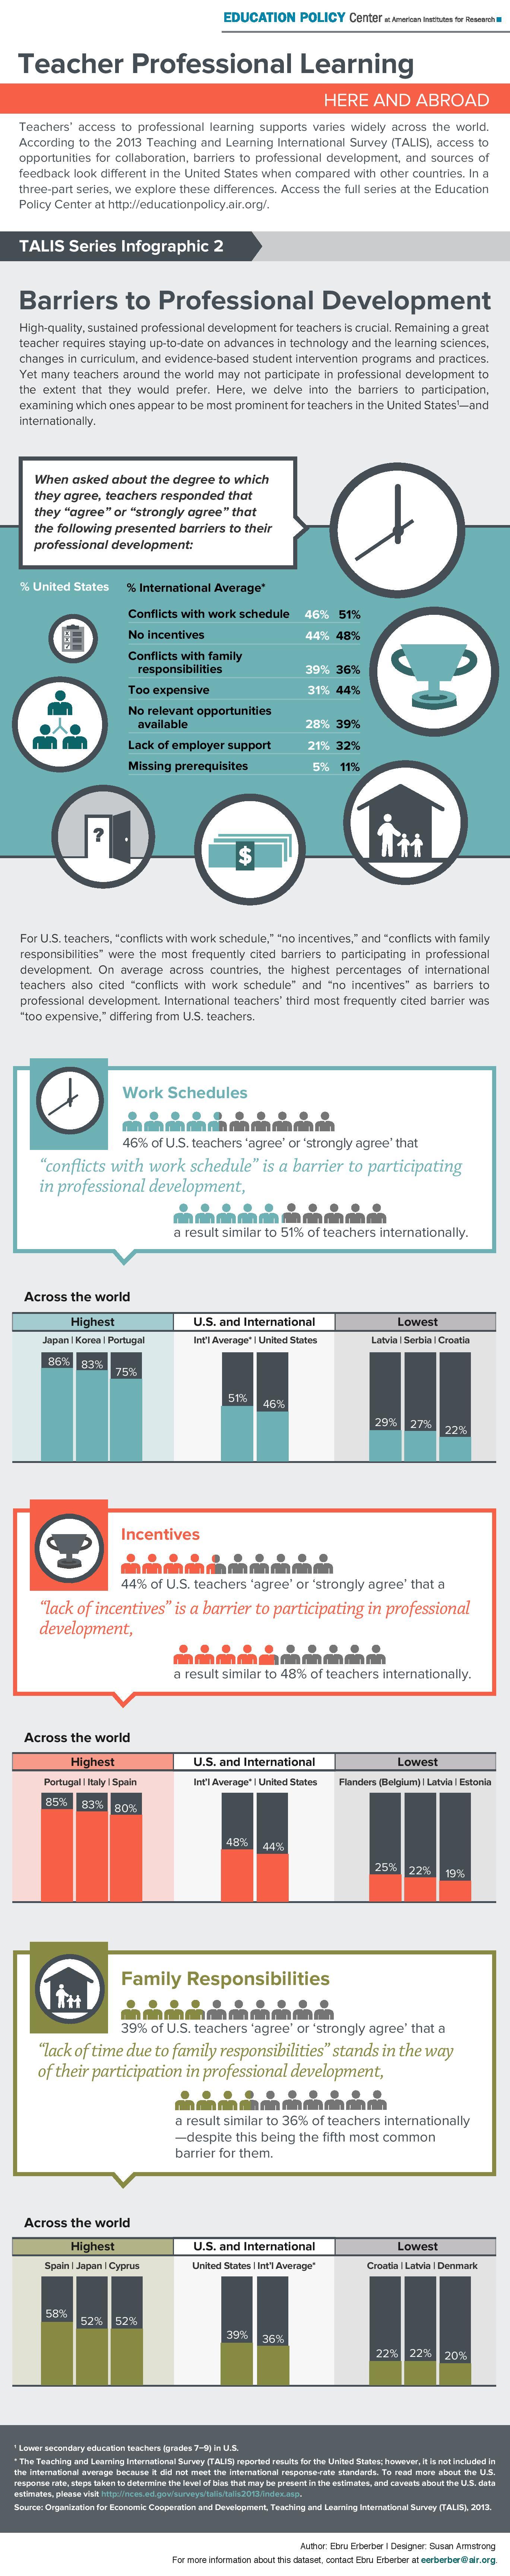 Teachers' Professional Development Barriers Infographic